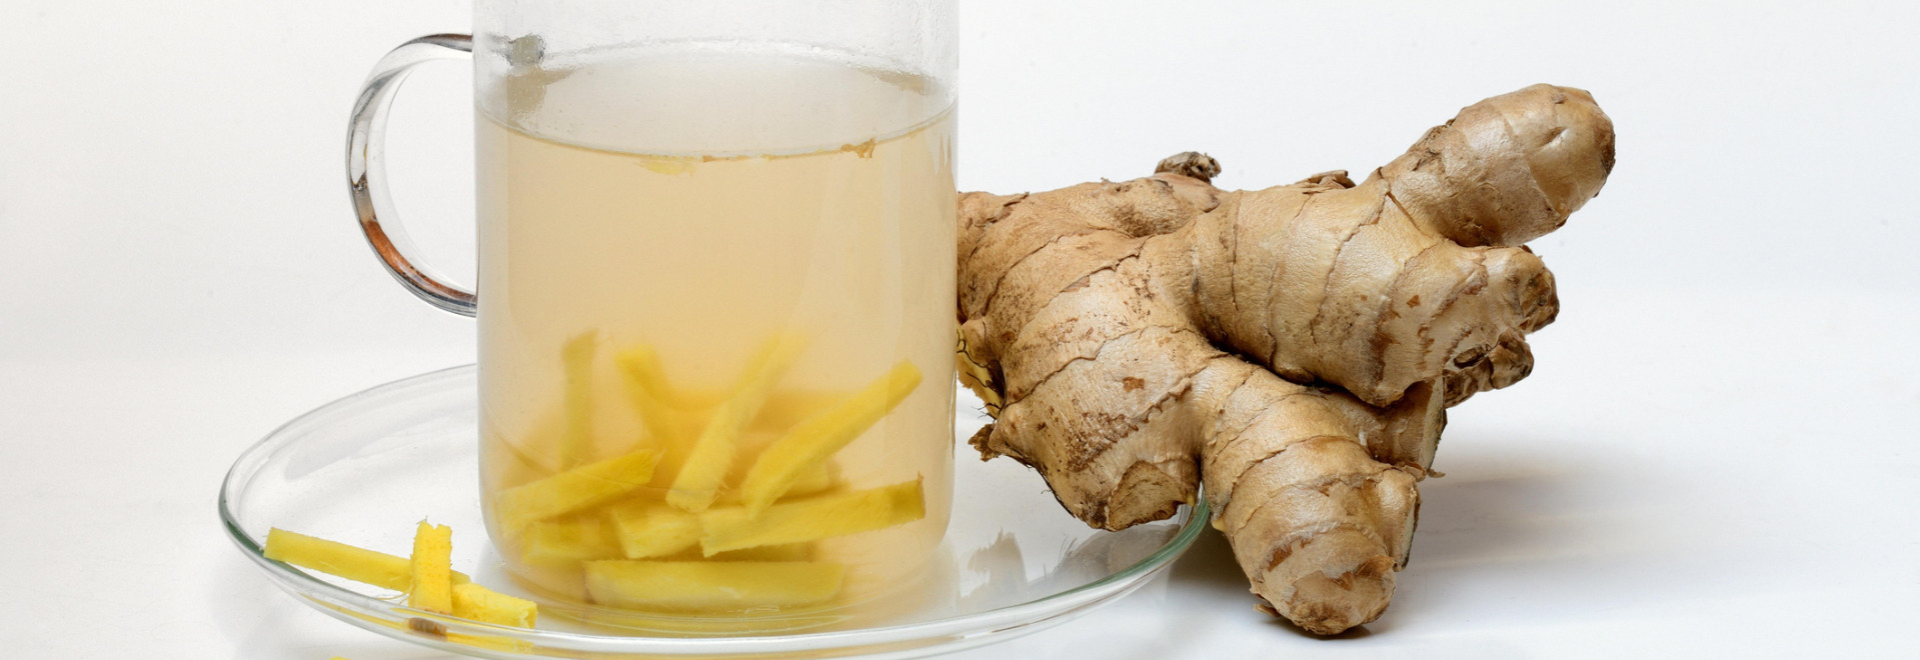 ginger-health-benefits-recipes